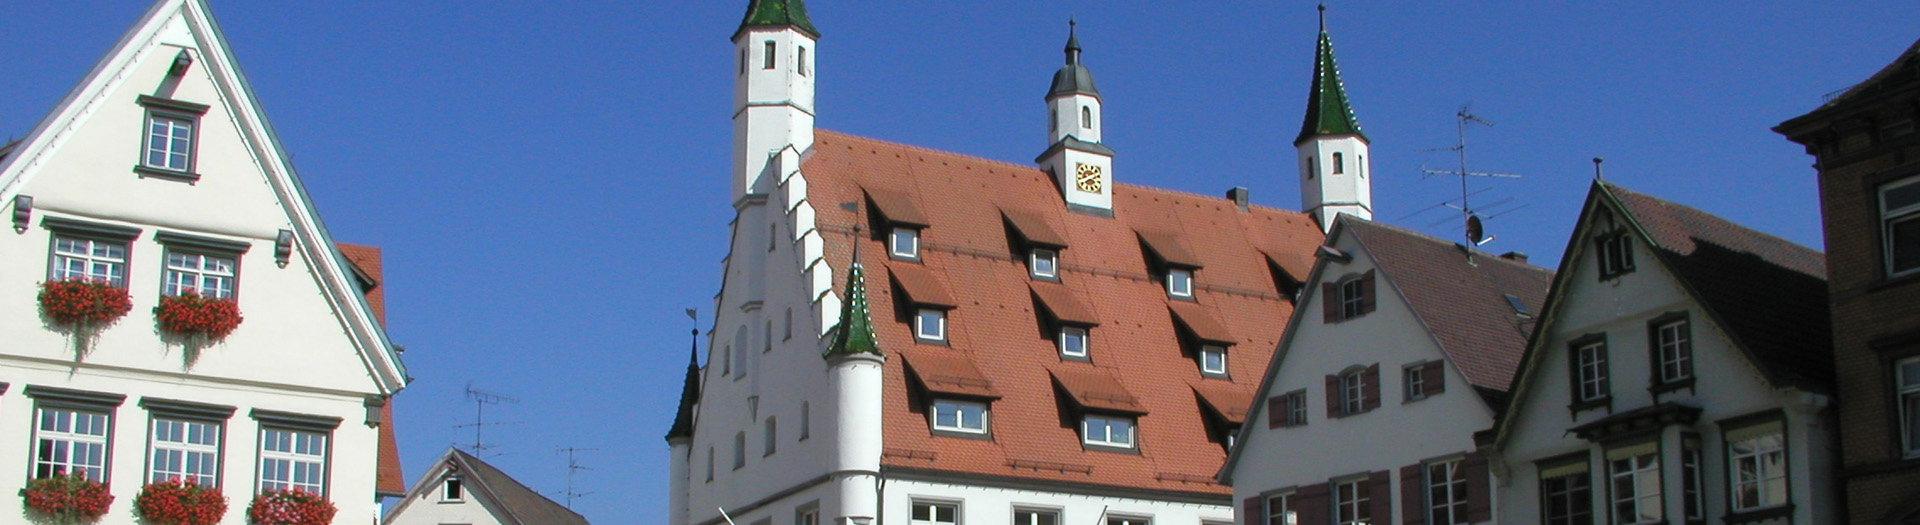 Foto Böhmenkirch